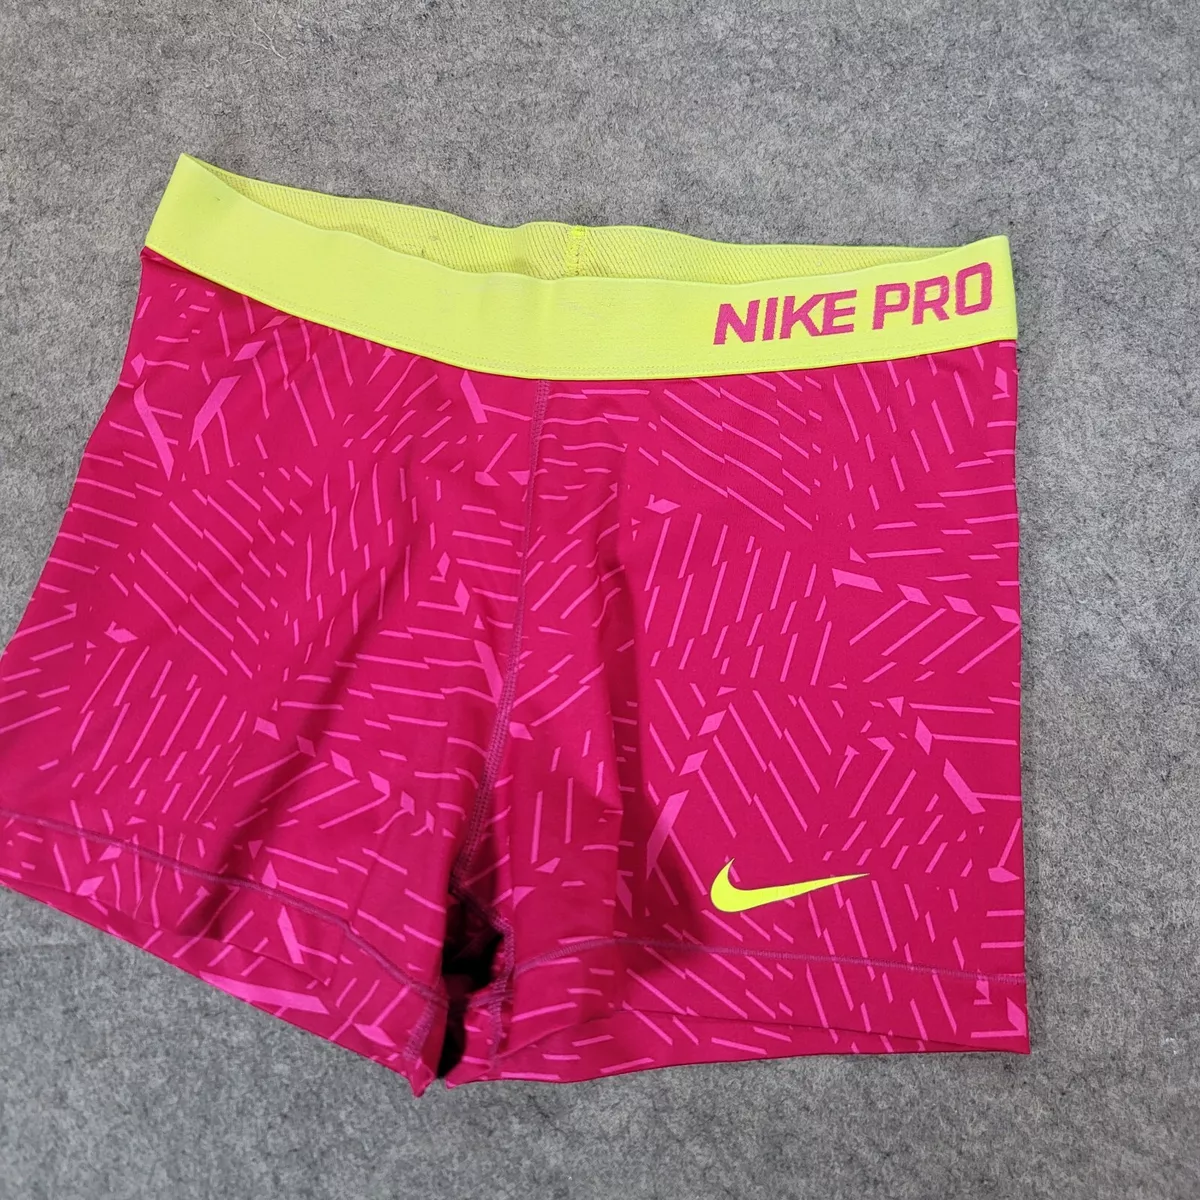 Nike Pro Shorts Womens Large Pink Yellow Spandex Dri Fit Gym